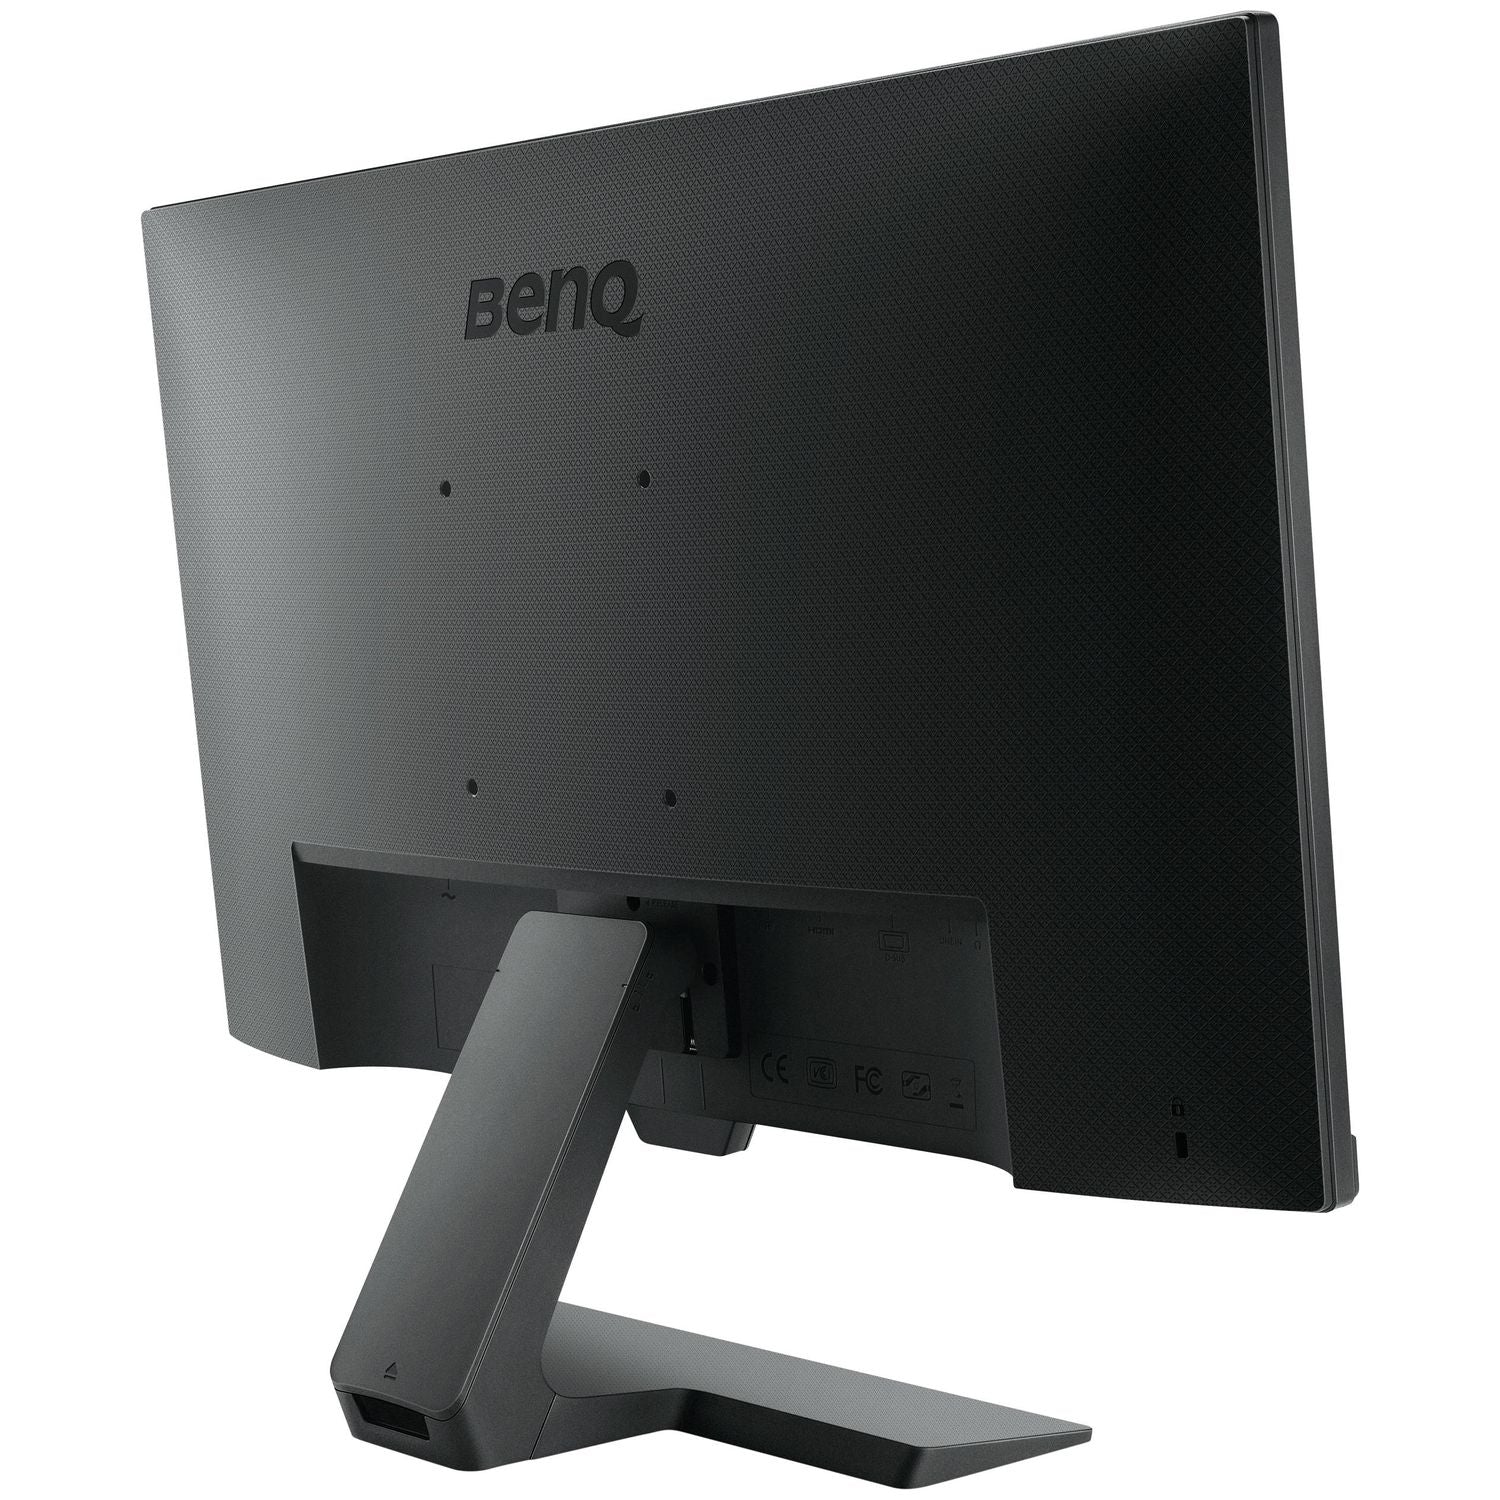 BenQ GW2480 Proprietary Eye Care 24-inch IPS Borderless Slim 1080p Monitor with Adaptive Brightness